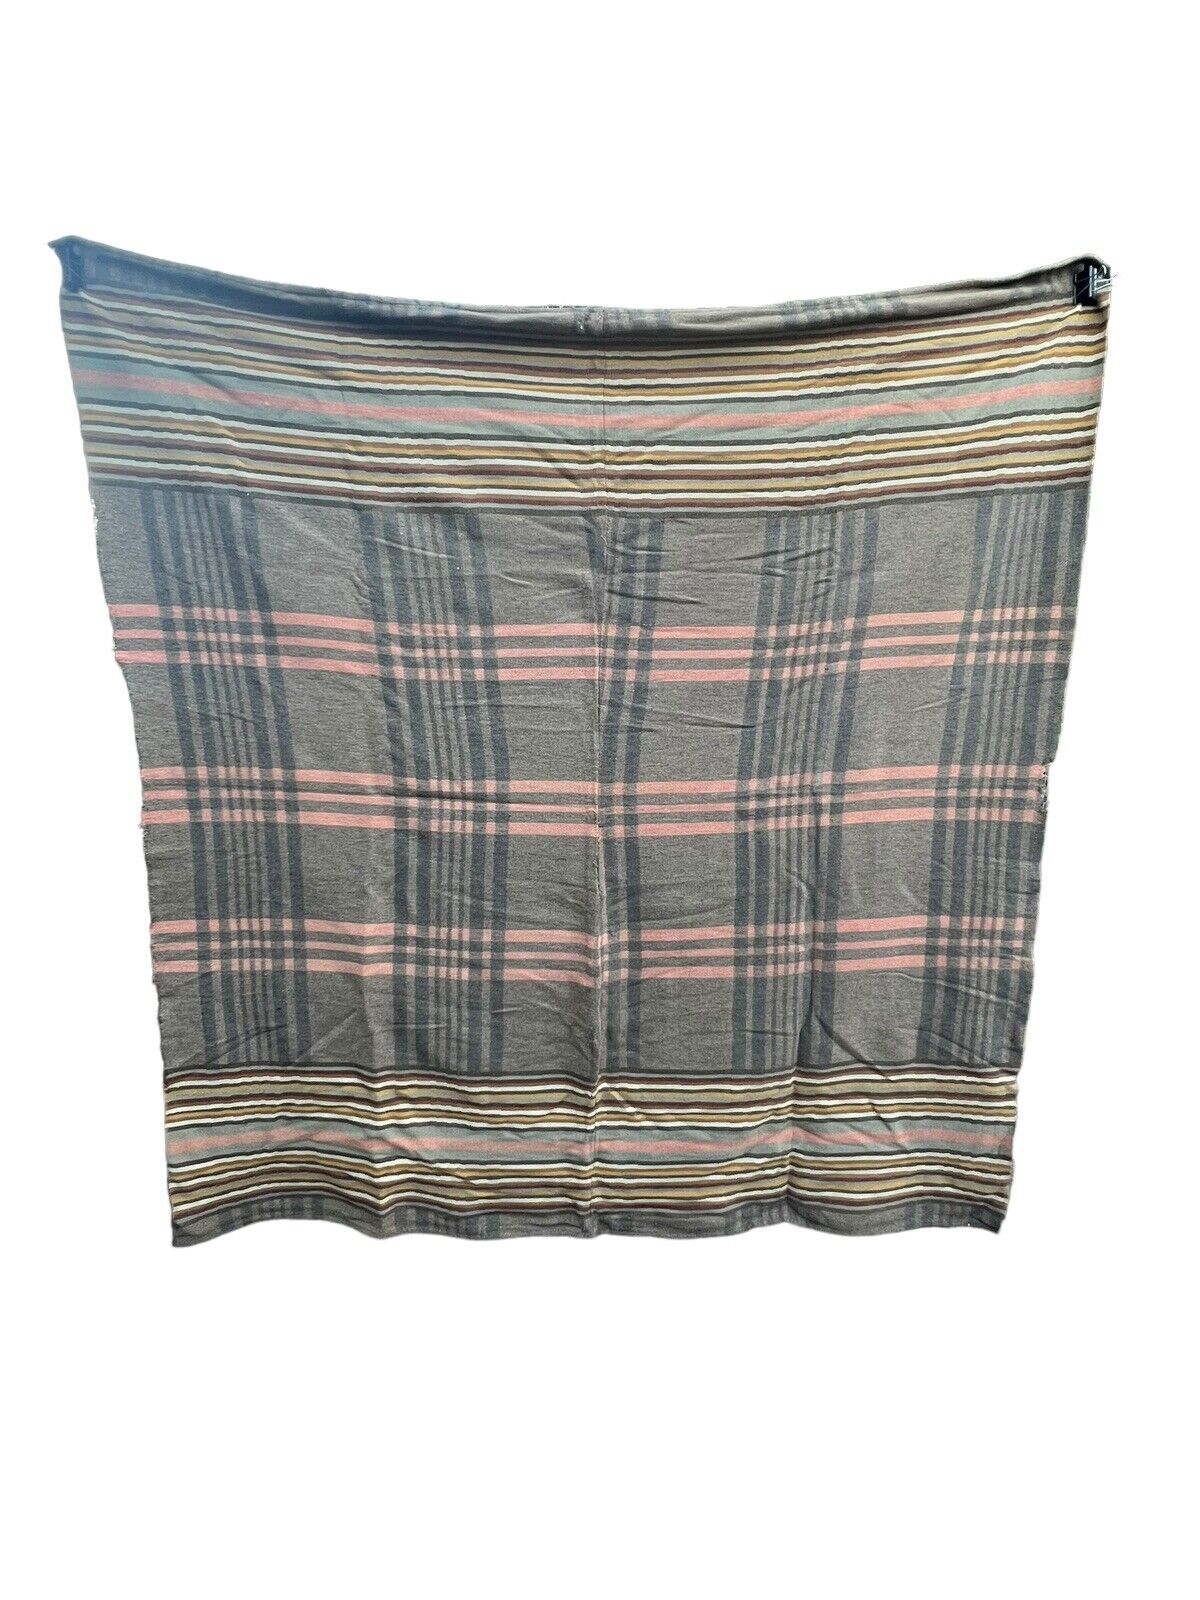 Vintage Distressed Camp Blanket Plaid Striped  71x65